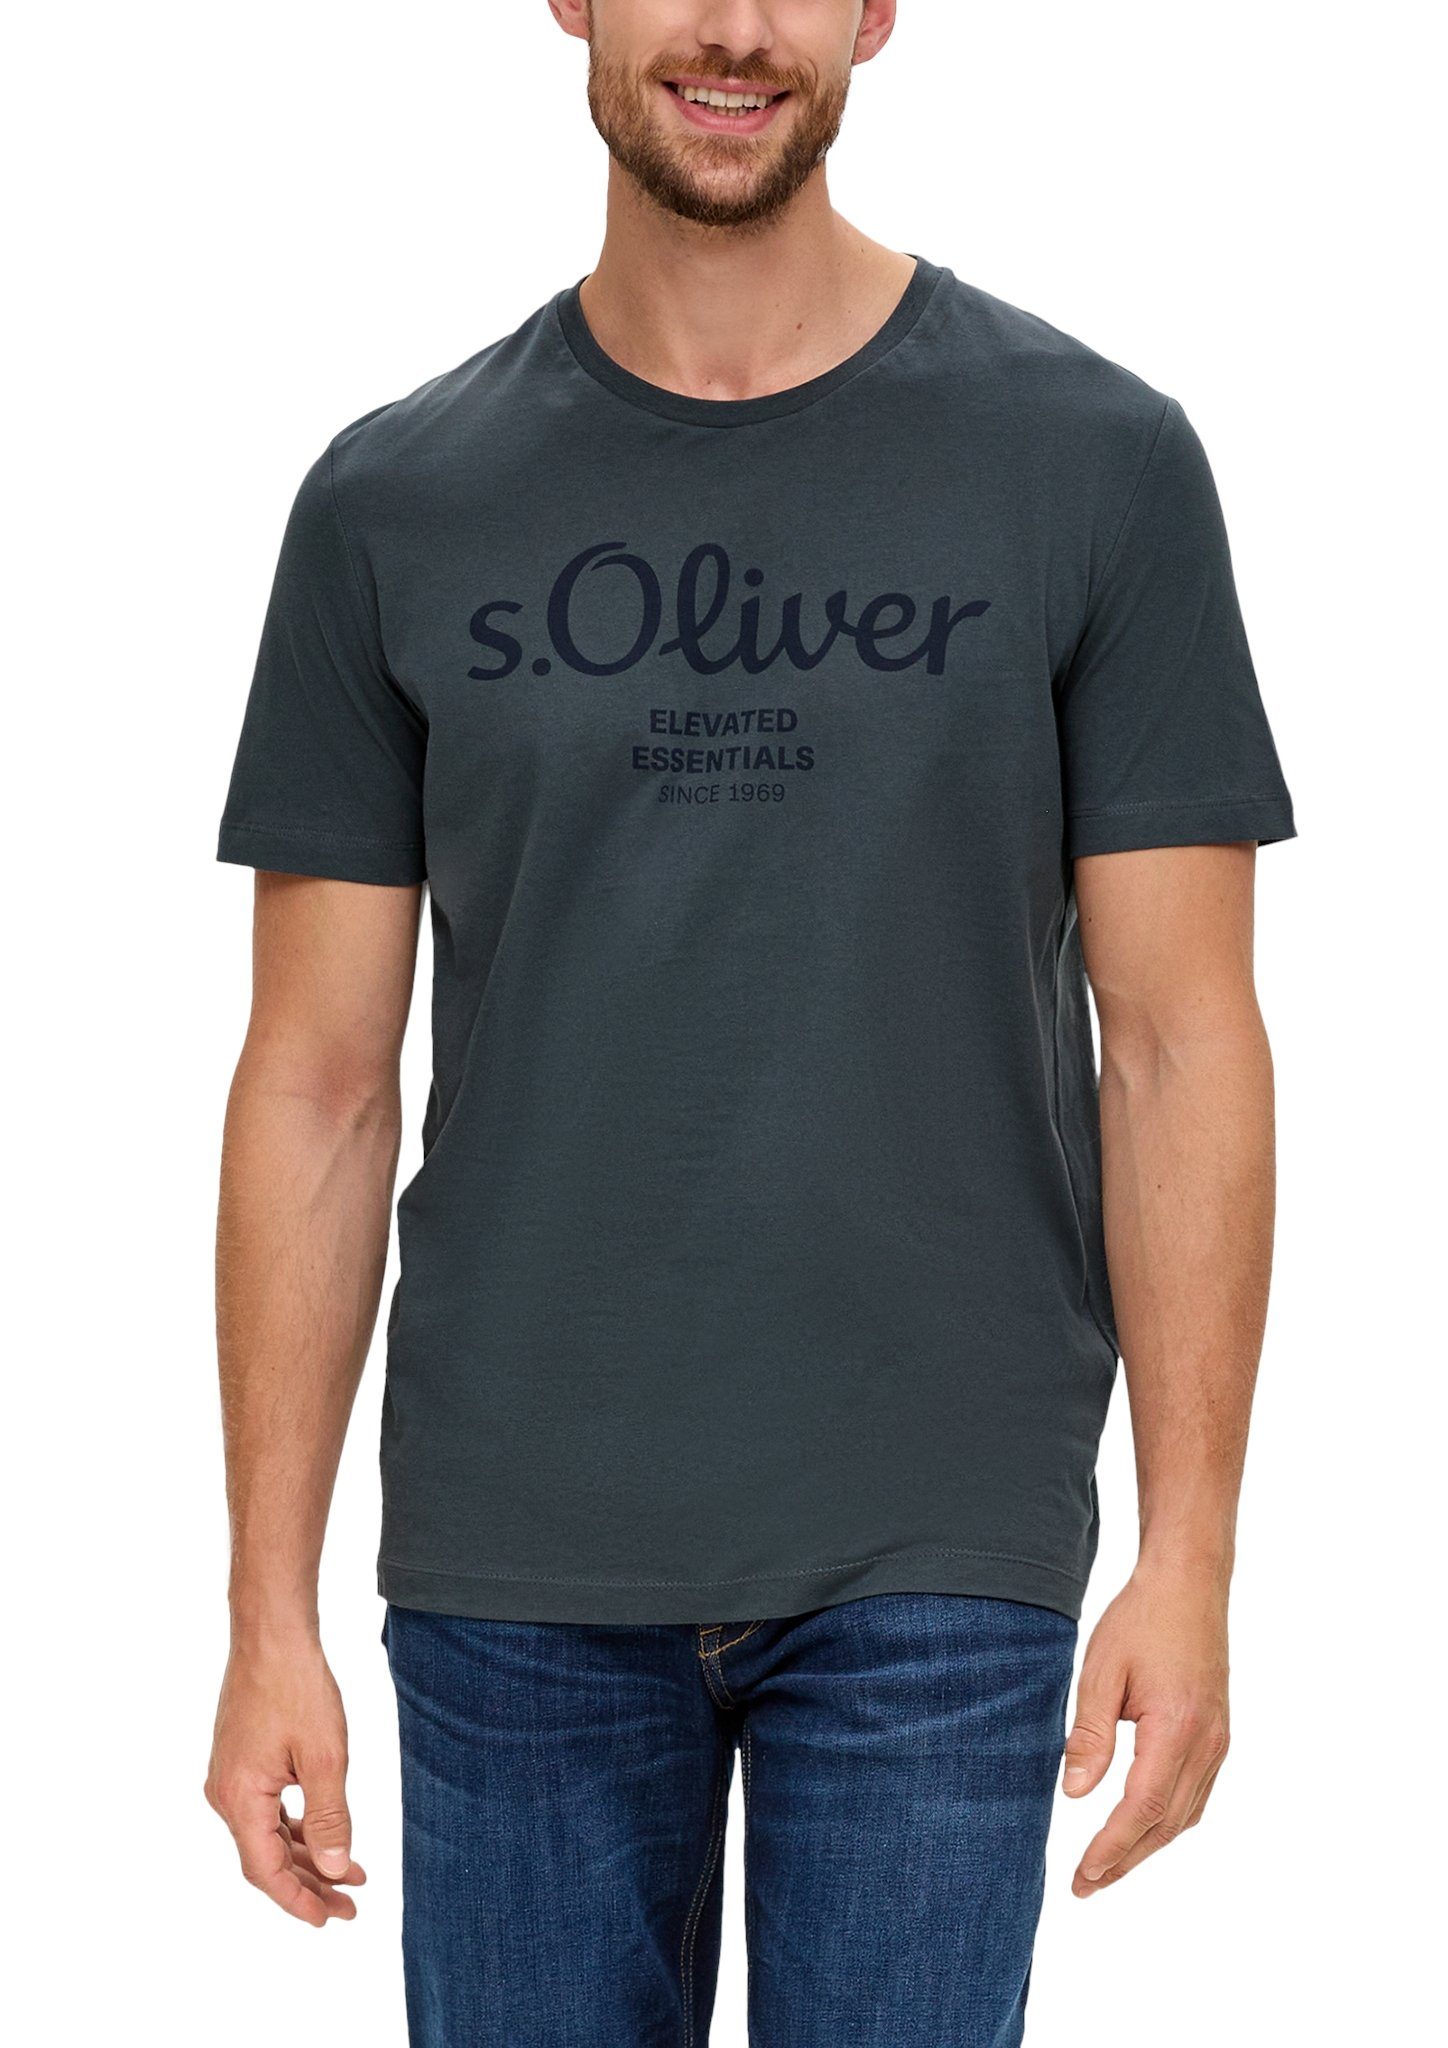 dark sportiven im T-Shirt grey Look s.Oliver